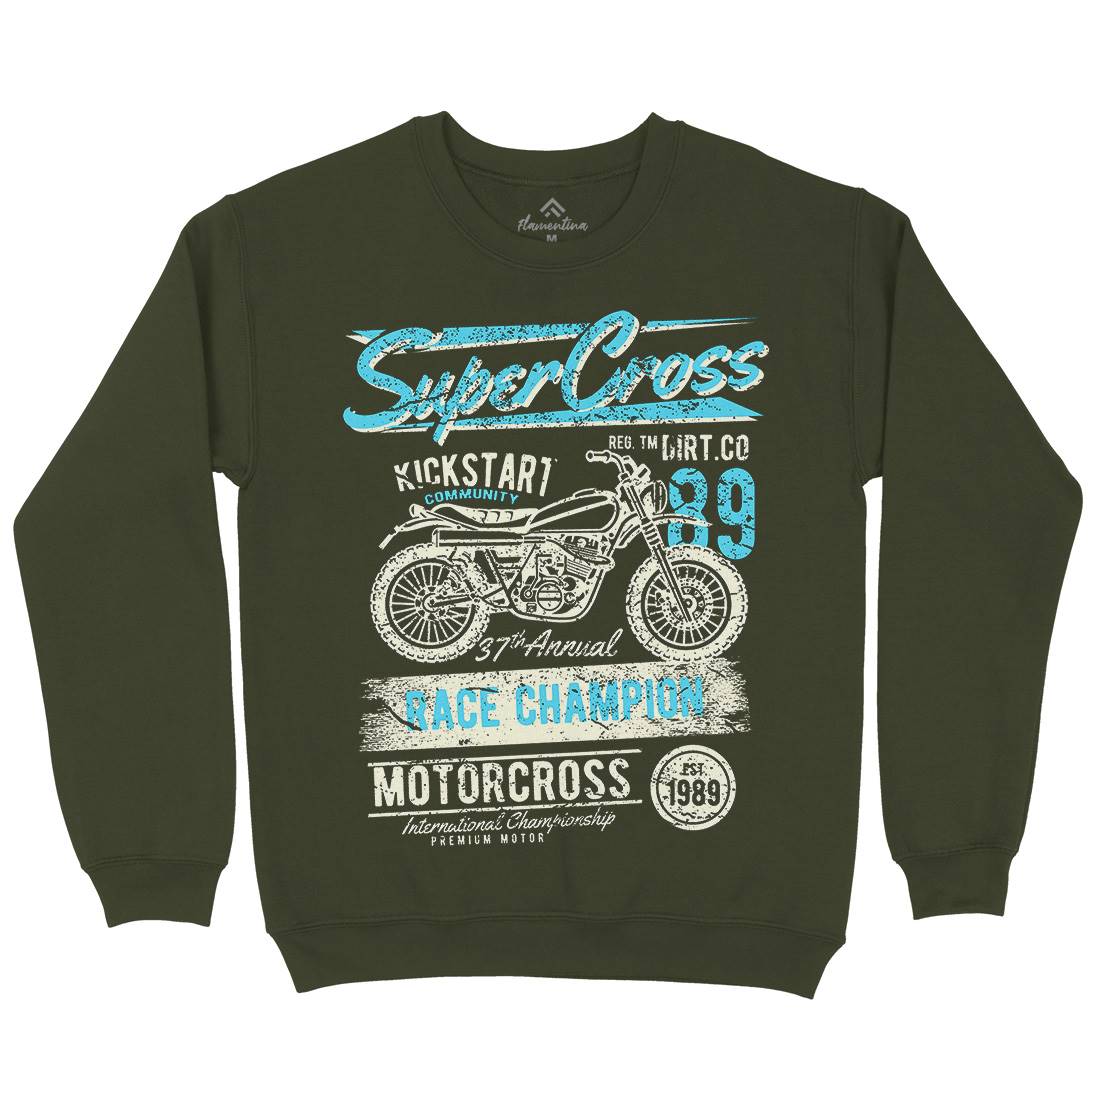 Super Cross Mens Crew Neck Sweatshirt Motorcycles A165